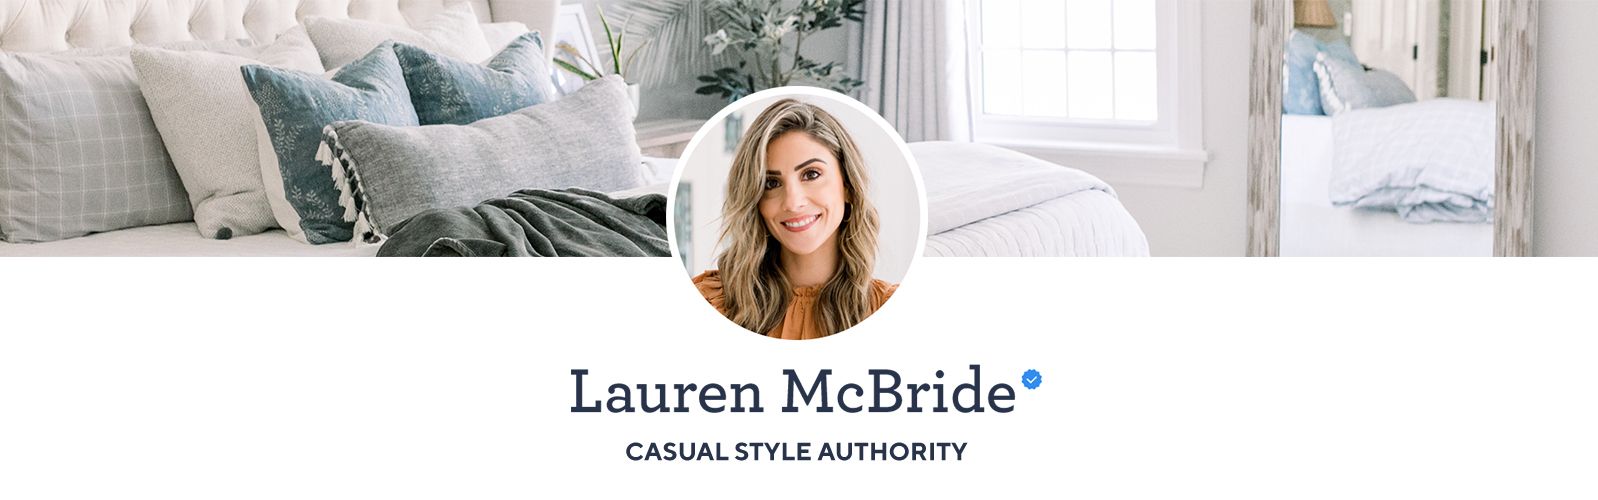 Lauren McBride - Casual Style Authority